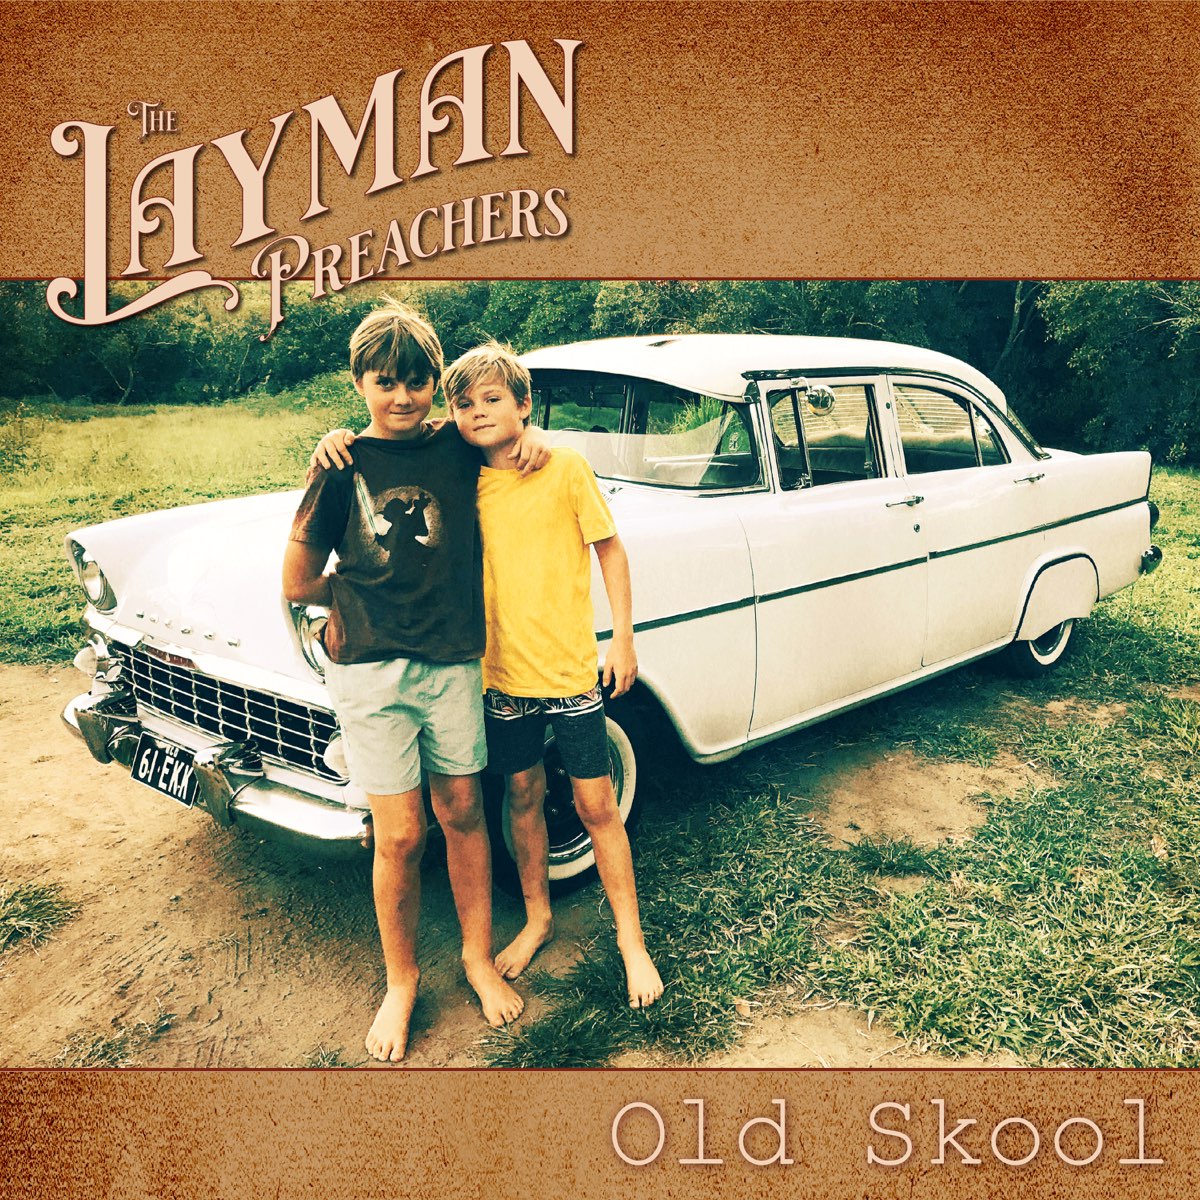 Old Skool - Single by The Layman Preachers on Apple Music